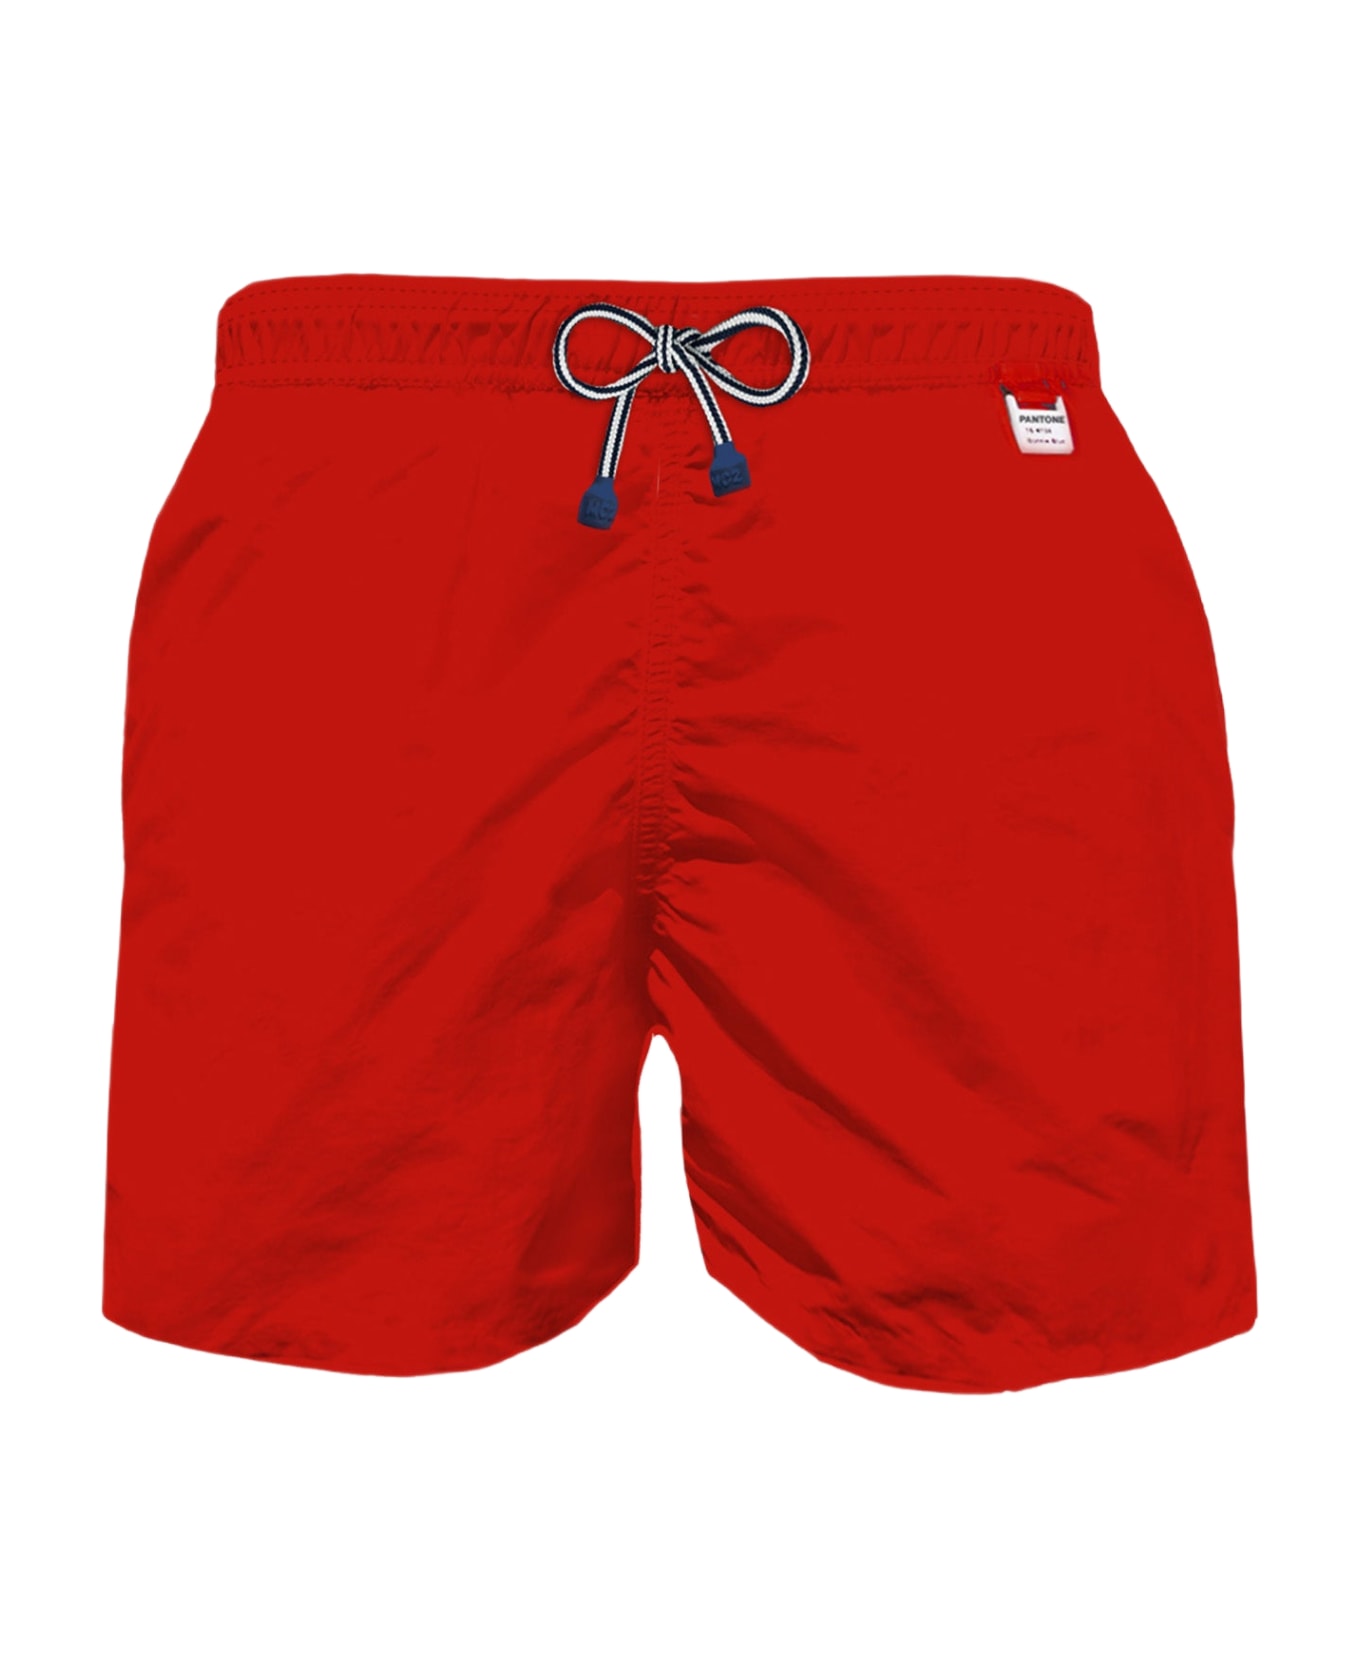 MC2 Saint Barth Man Red Swim Shorts | Pantone Special Edition - RED